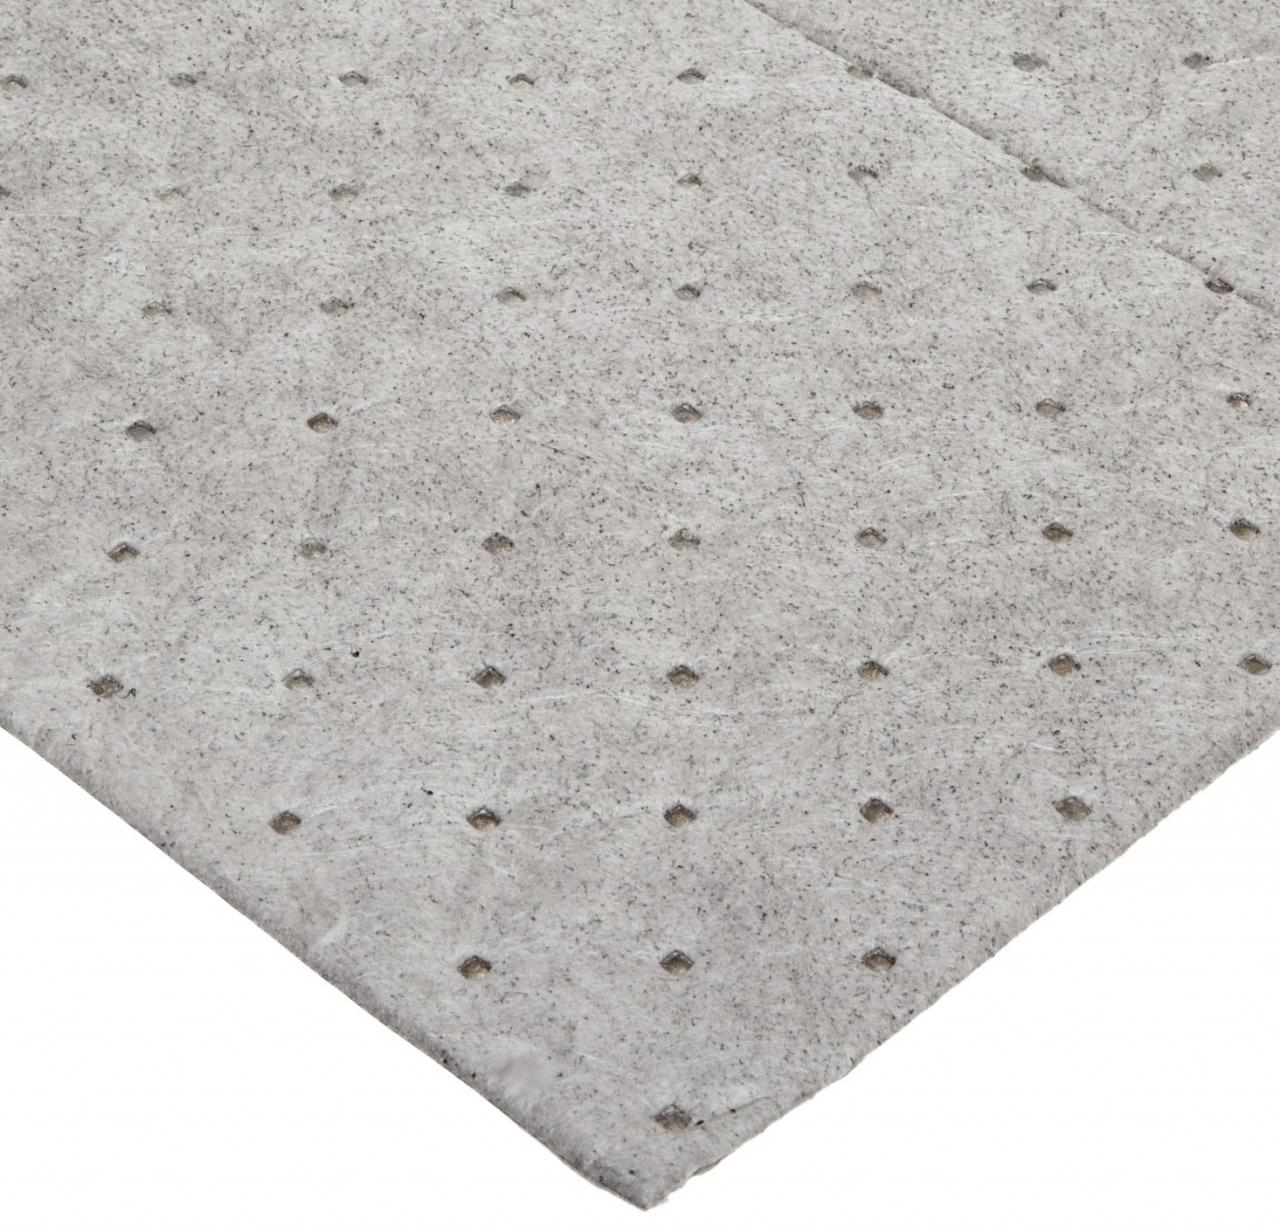 Buy New Pig Corporation-PM50435 Pig Mat for Garage | New Pig's Original  Gray Mat Roll | Oil Mats for Garage Floor | All Purpose Super Absorbent Mat  for Garage (50' x 15)